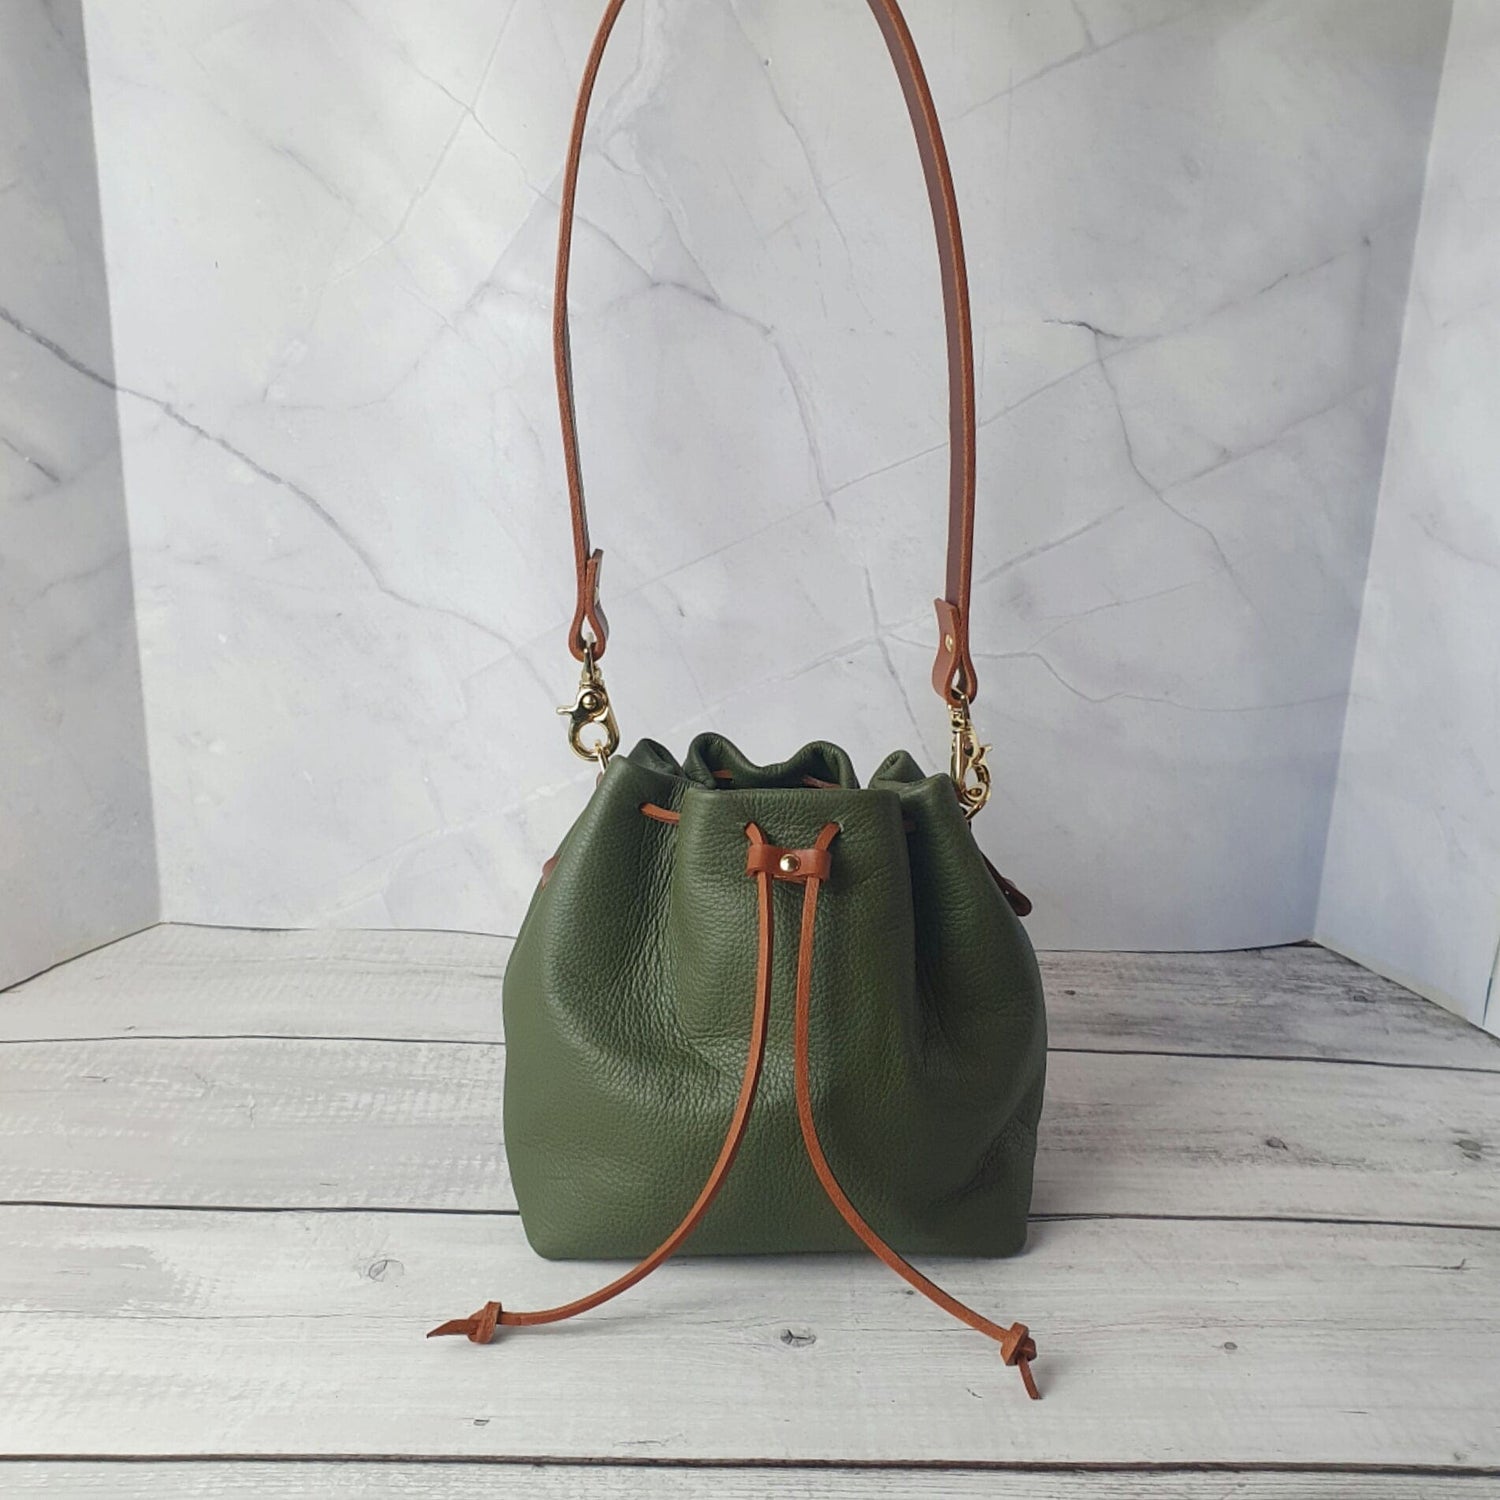 Louis Vuitton Noe Handbag Review! - Fashion For Lunch.